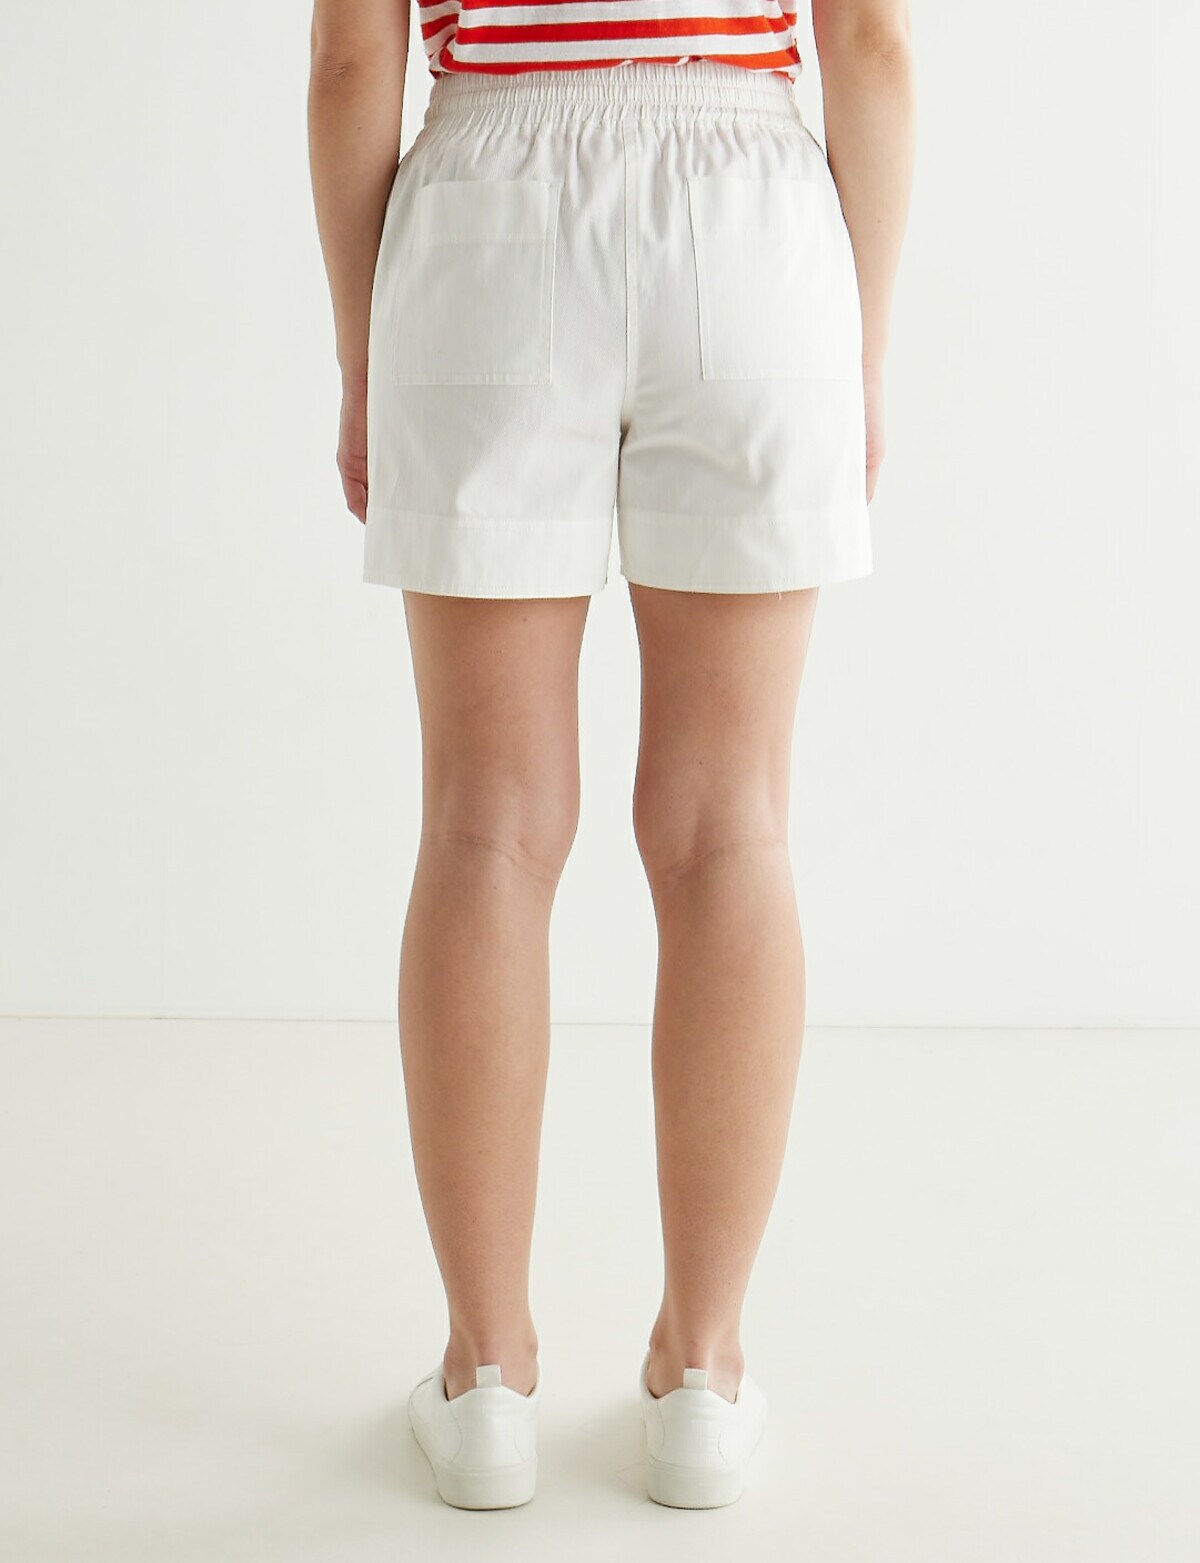 Zest Cotton Twill Short, White - Shorts